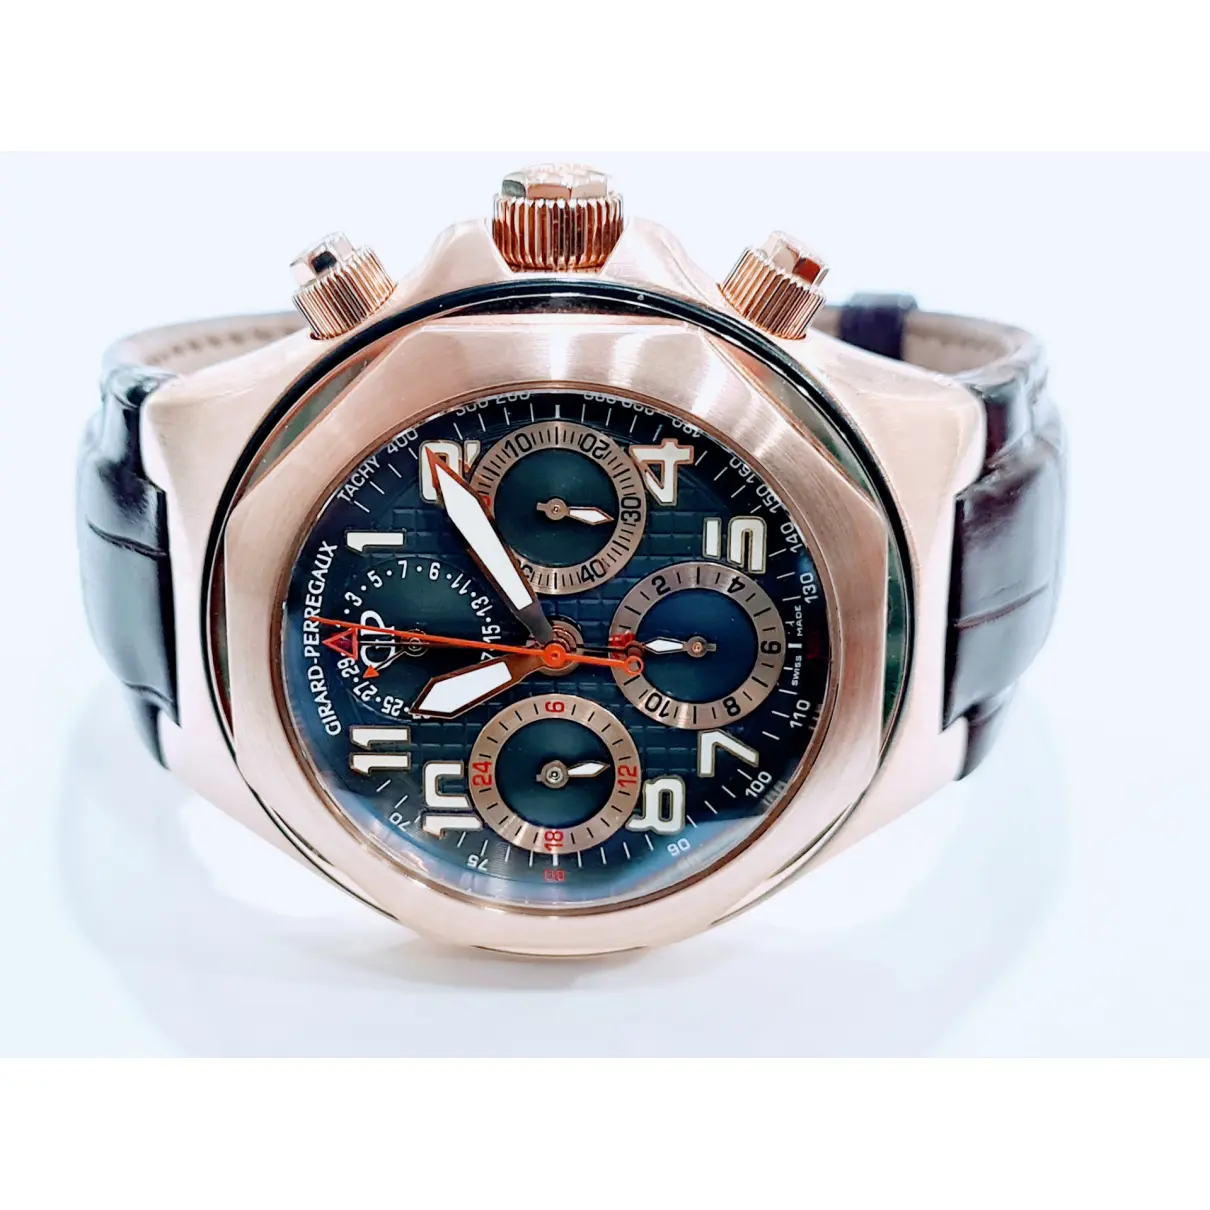 Buy Girard Perregaux Laureato EVO3 pink gold watch online